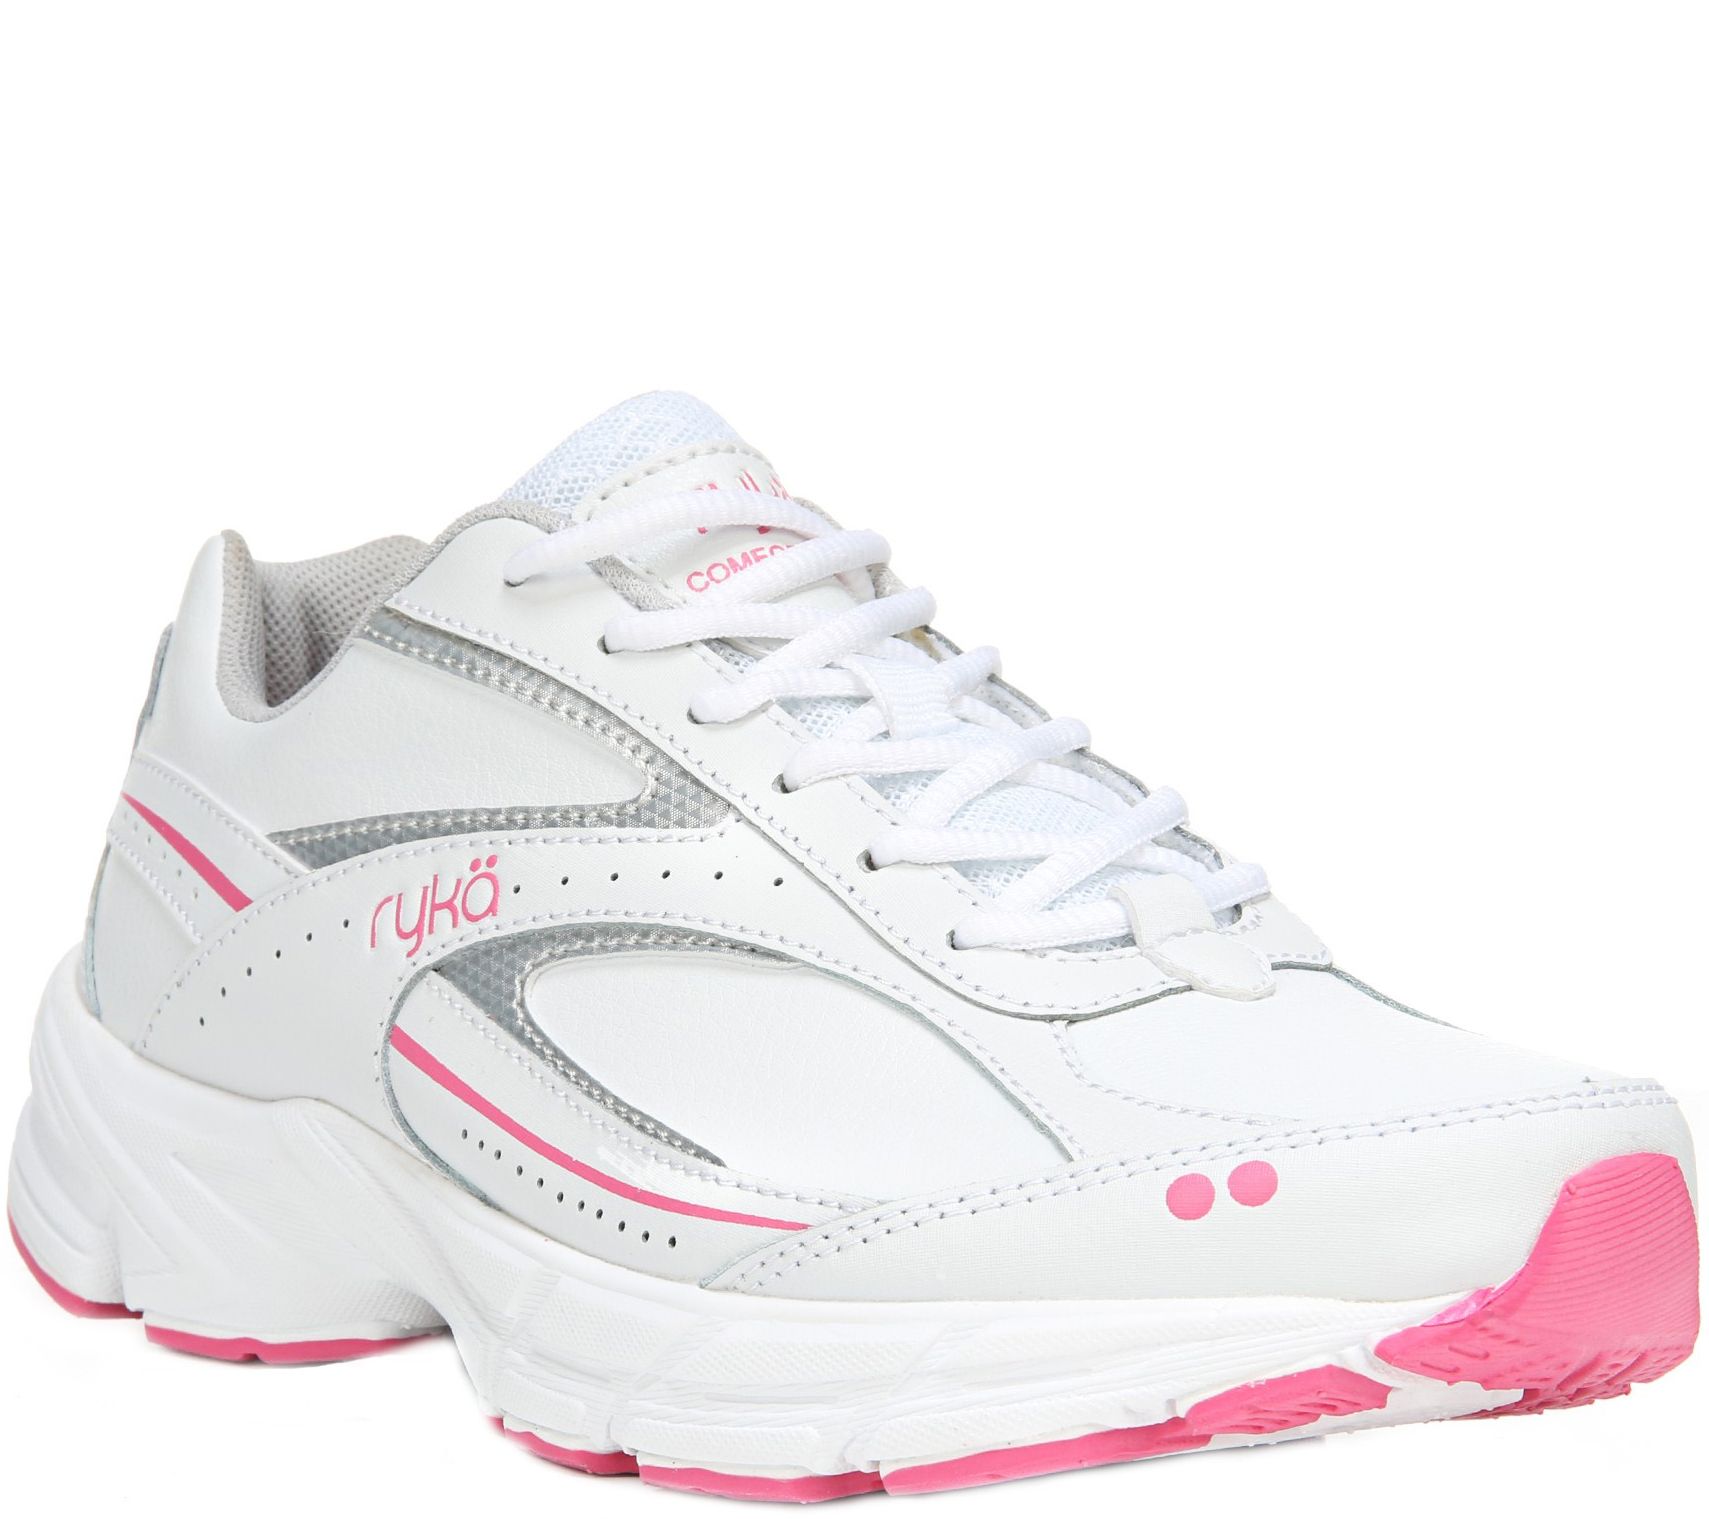 Ryka Lace-up Walking Sneakers - Comfort Walk - QVC.com